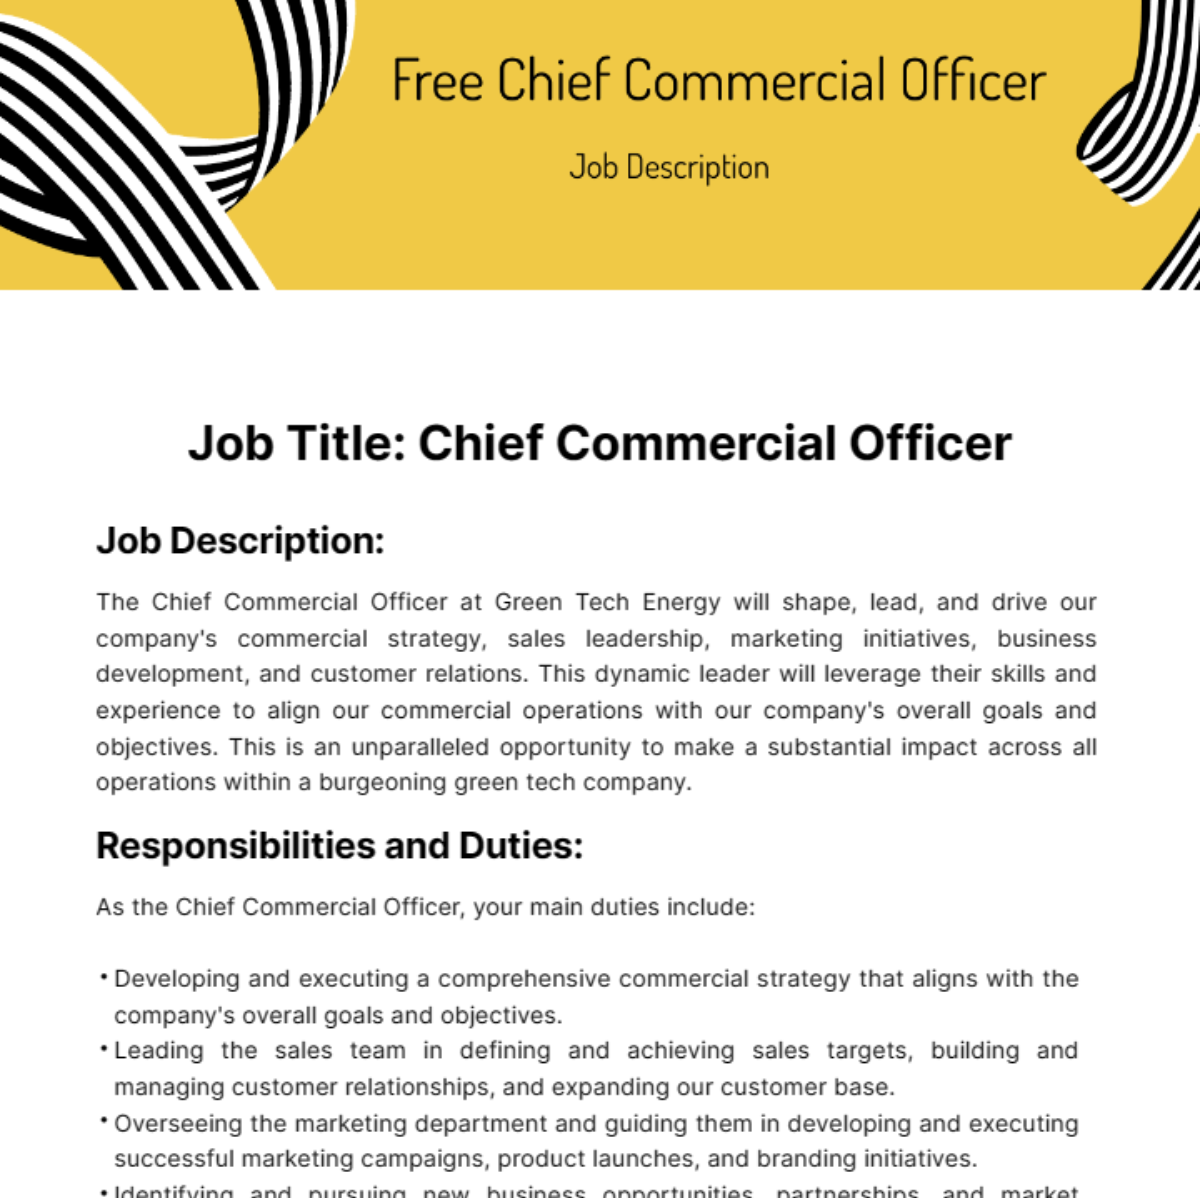 Chief Commercial Officer Job Description Edit Online 